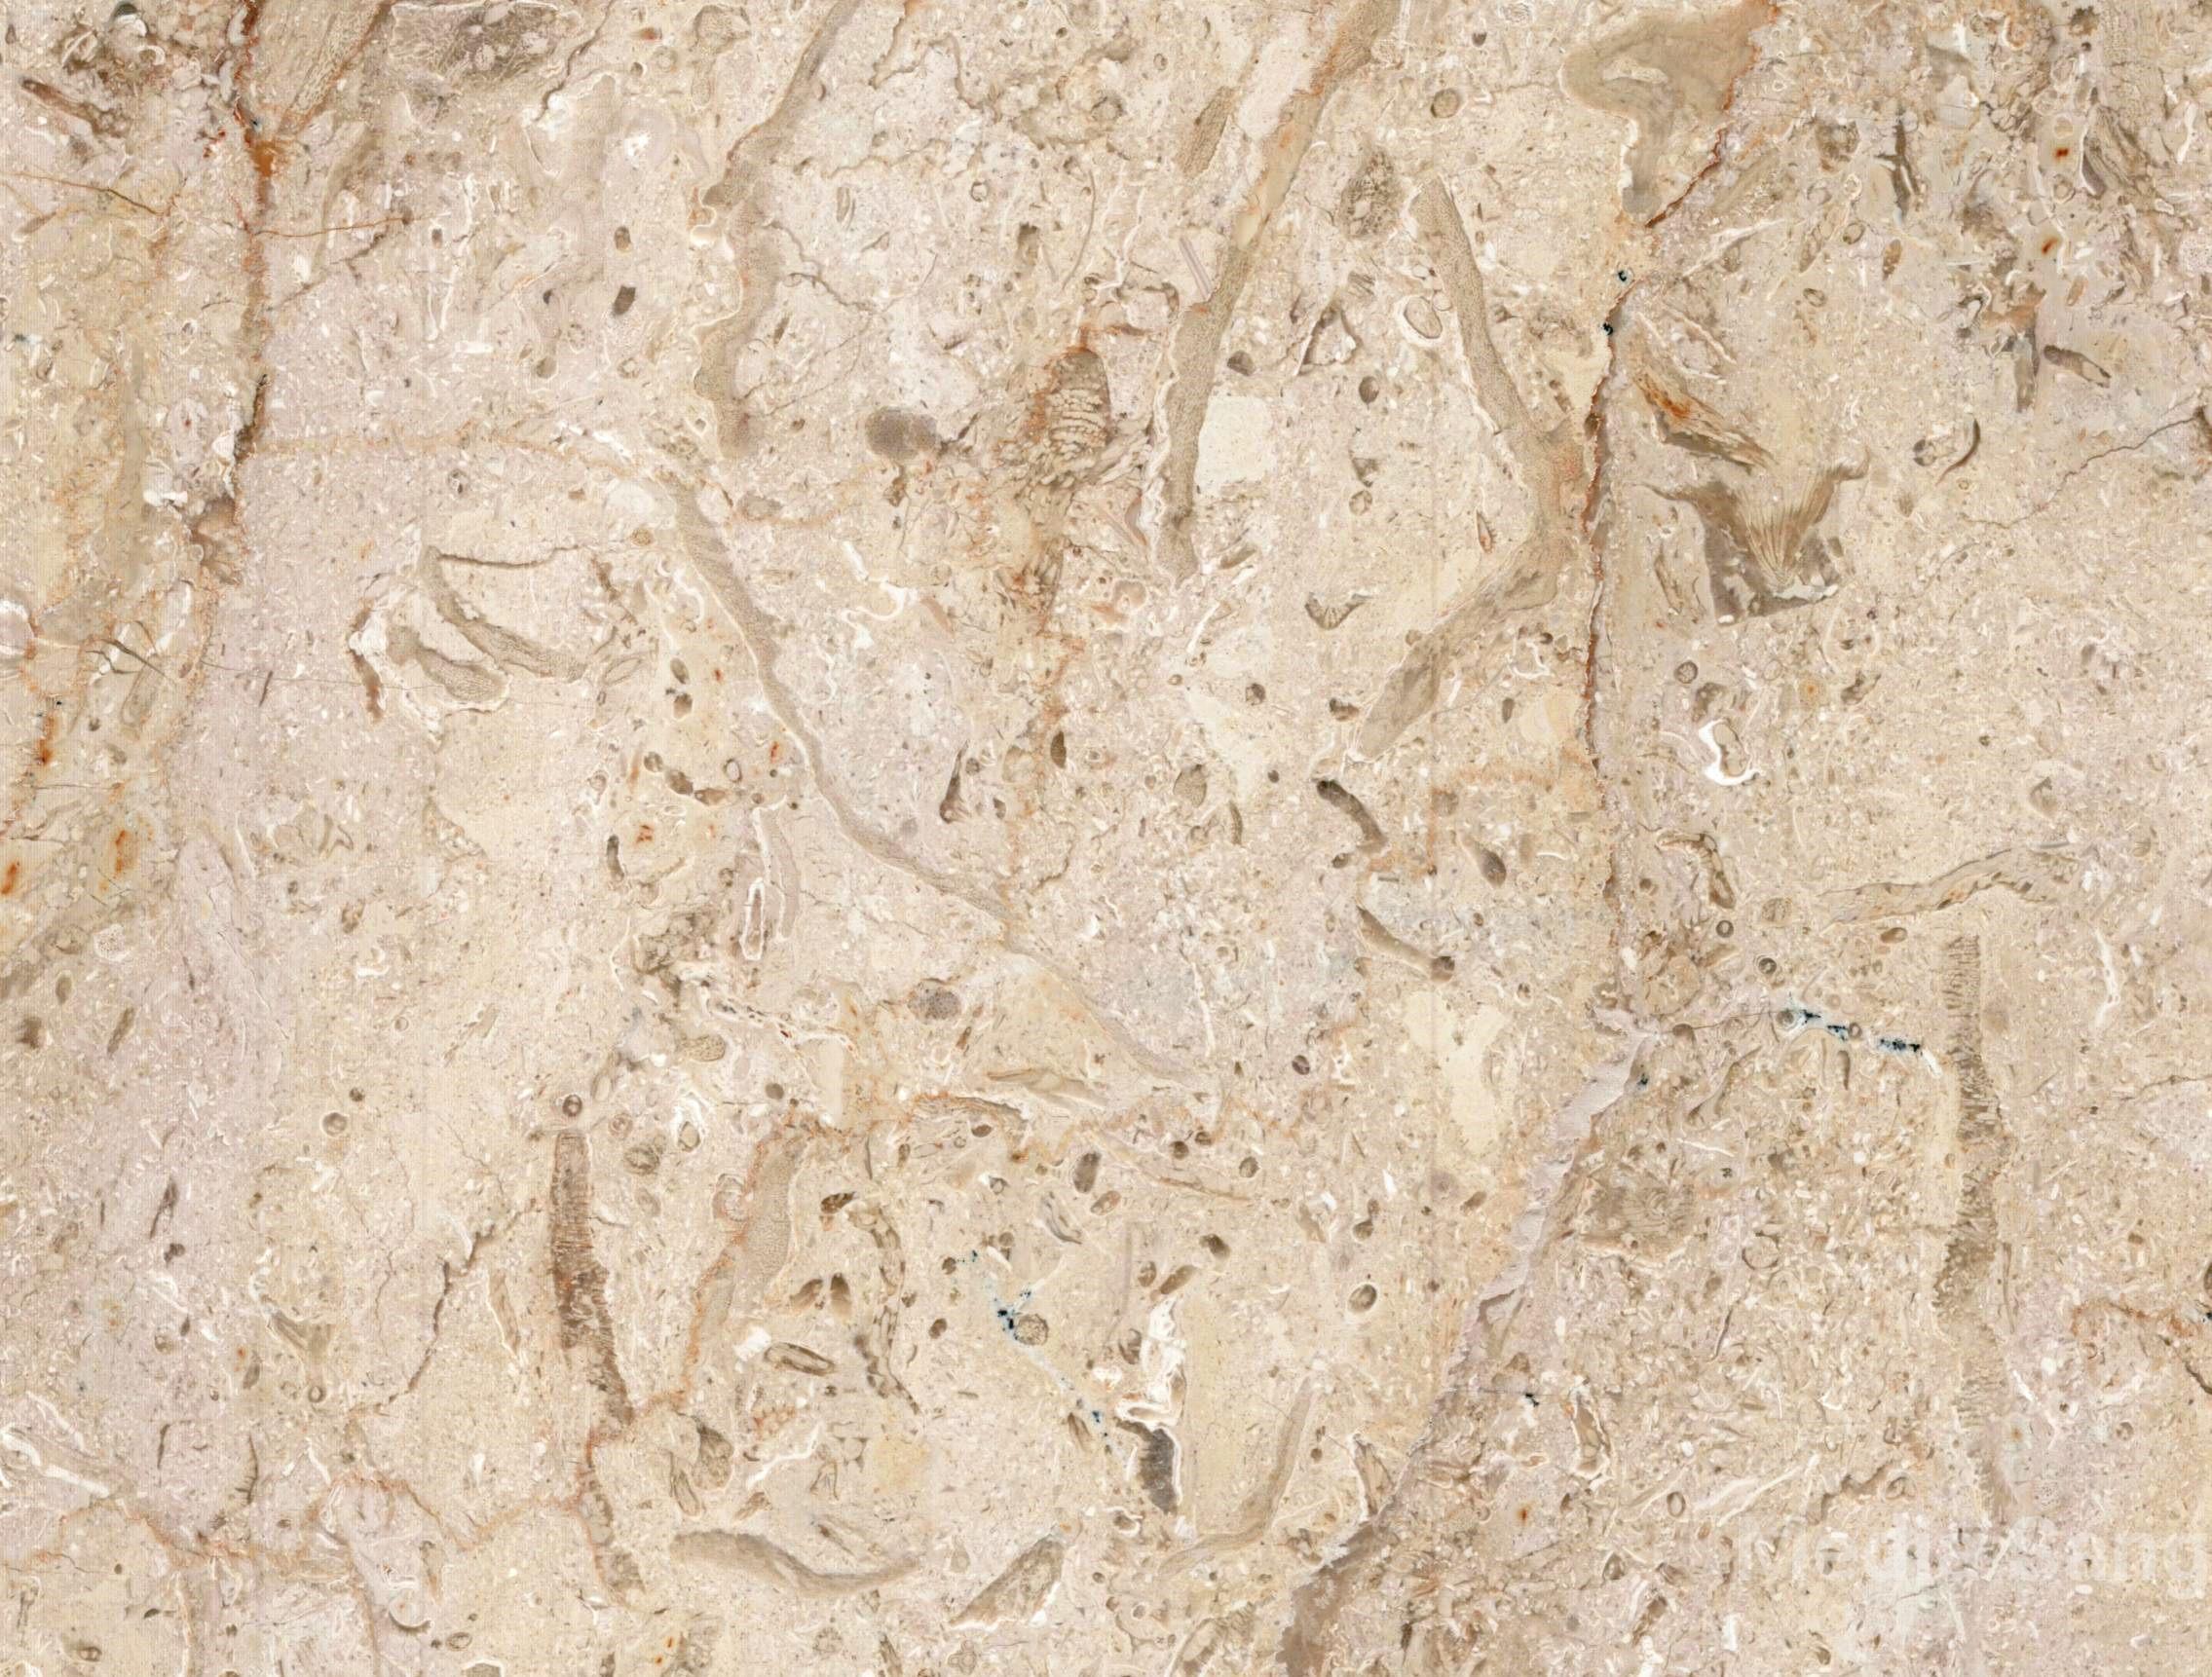 سنگ مرمریت آباده: پرطرفدار دوست داشتنی - مدیا سنگ